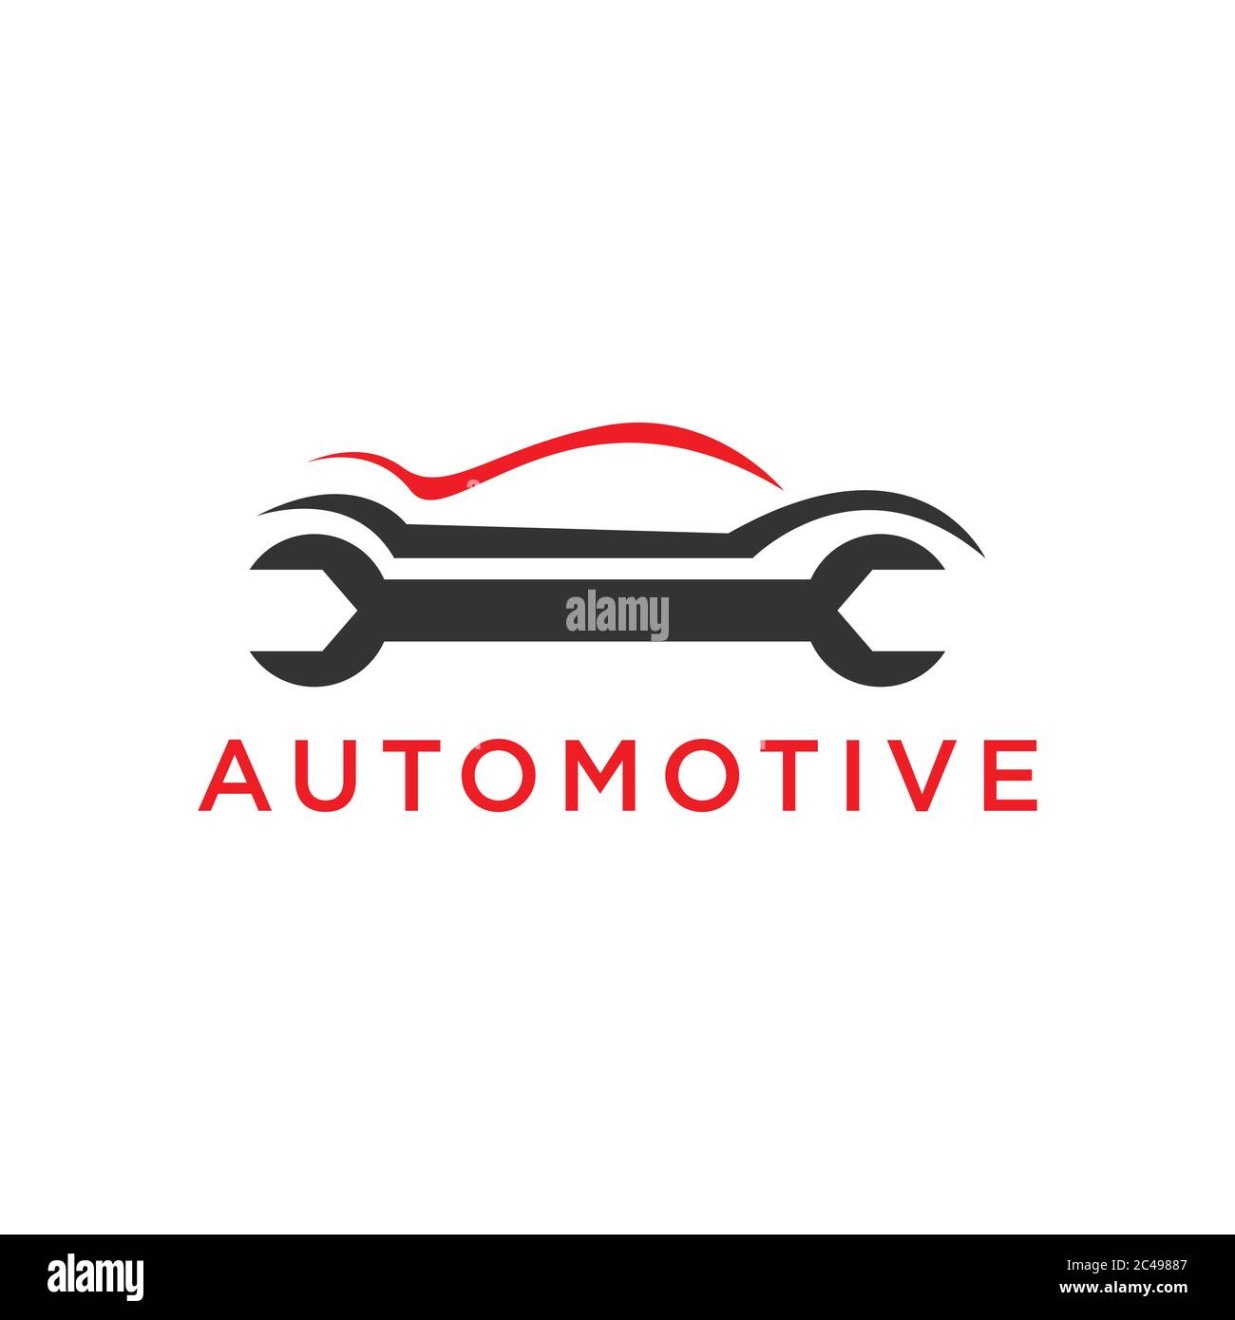 automotive logo design Bulan 5 c.alamy